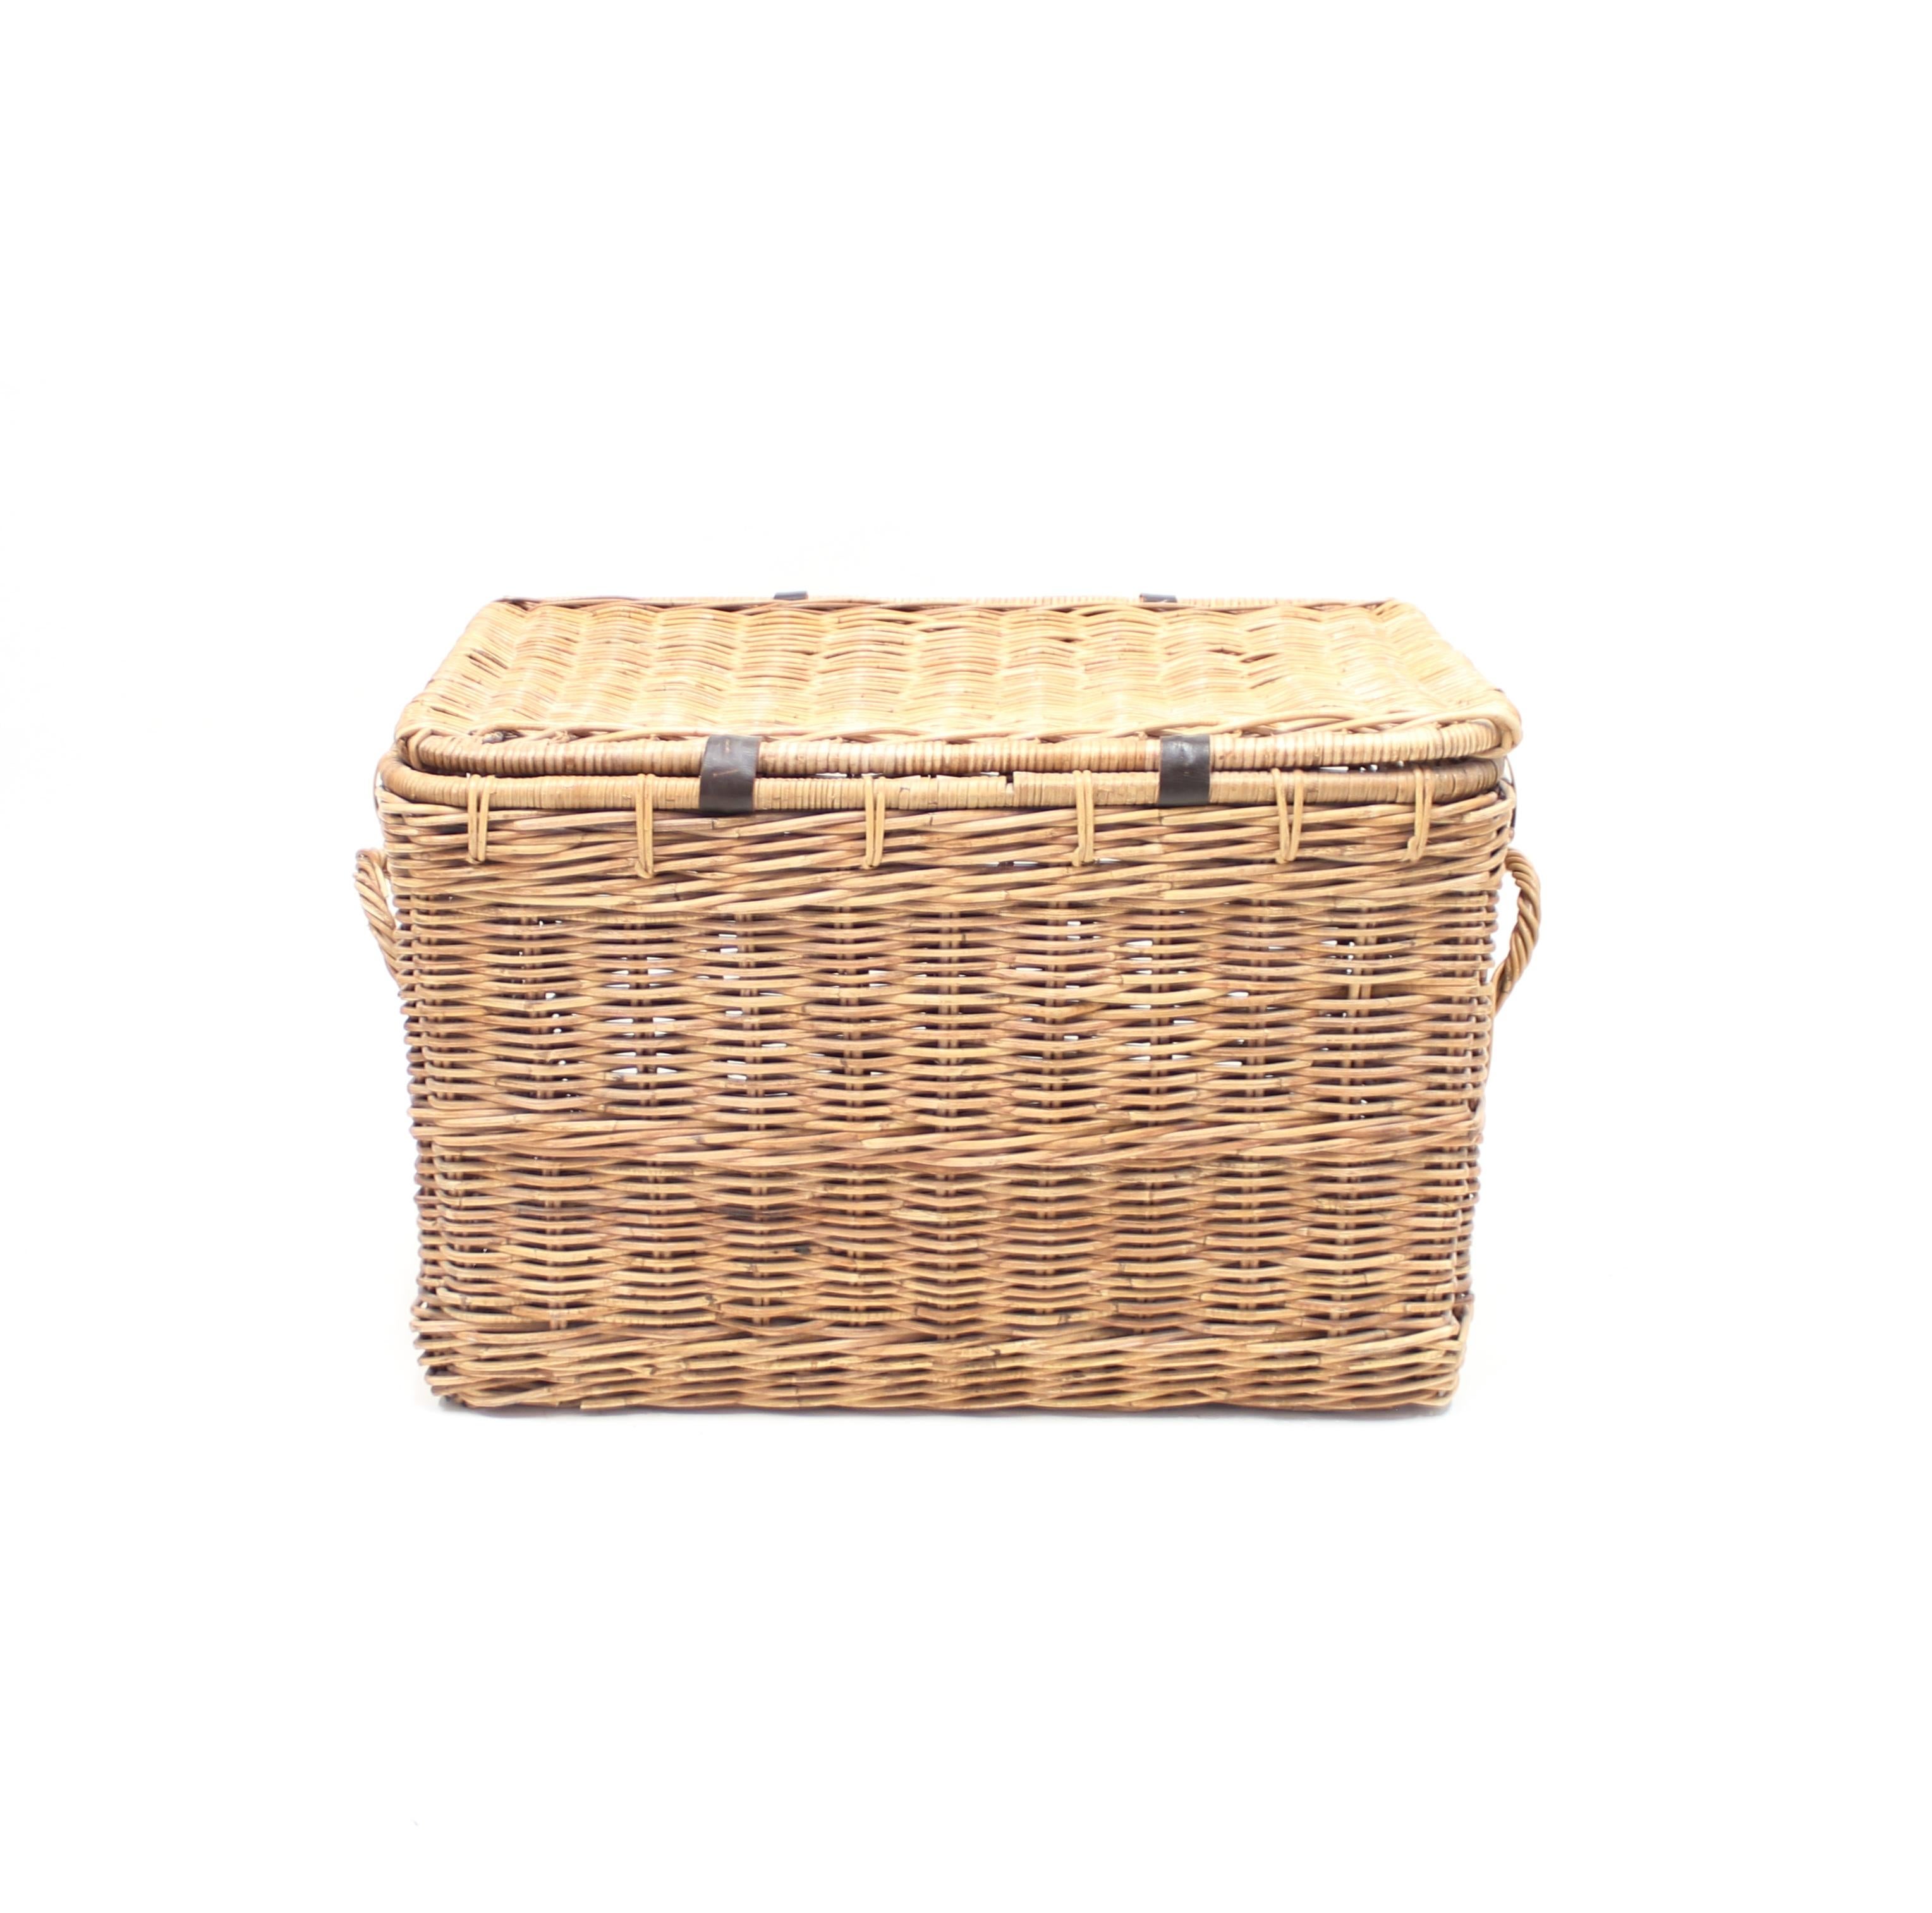 Leather Vintage Midcentury Wicker Laundry Basket, 1950s